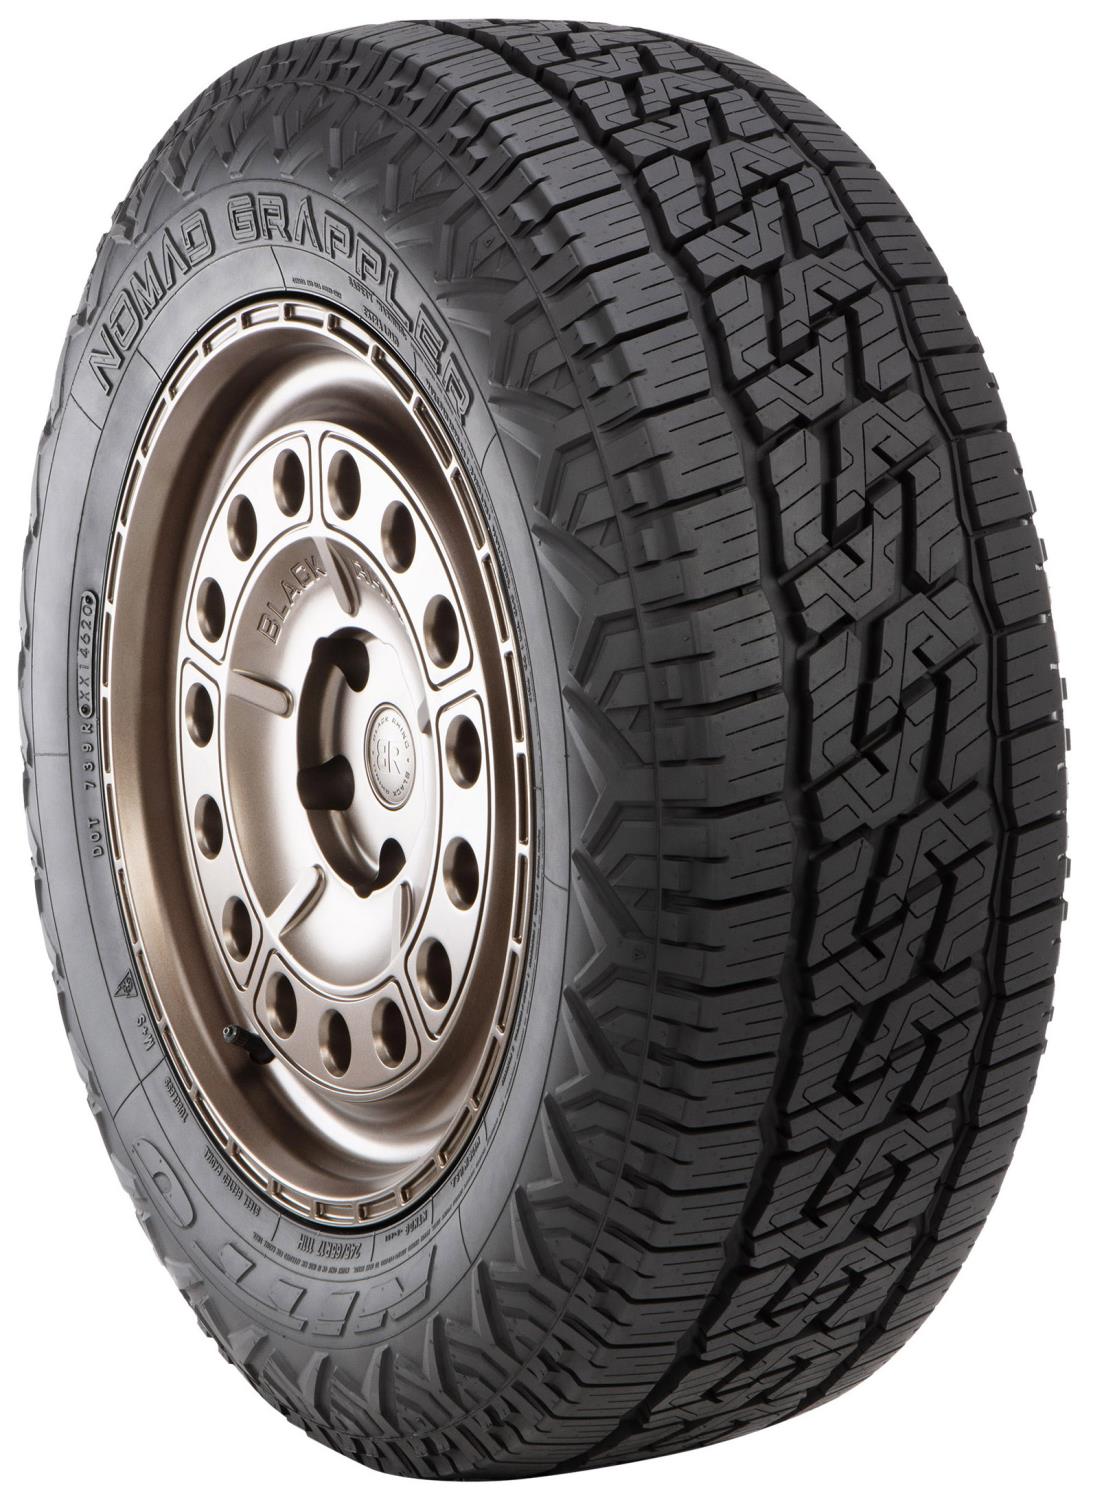 Nomad Grappler Crossover-Terrain Tire 235/55R18